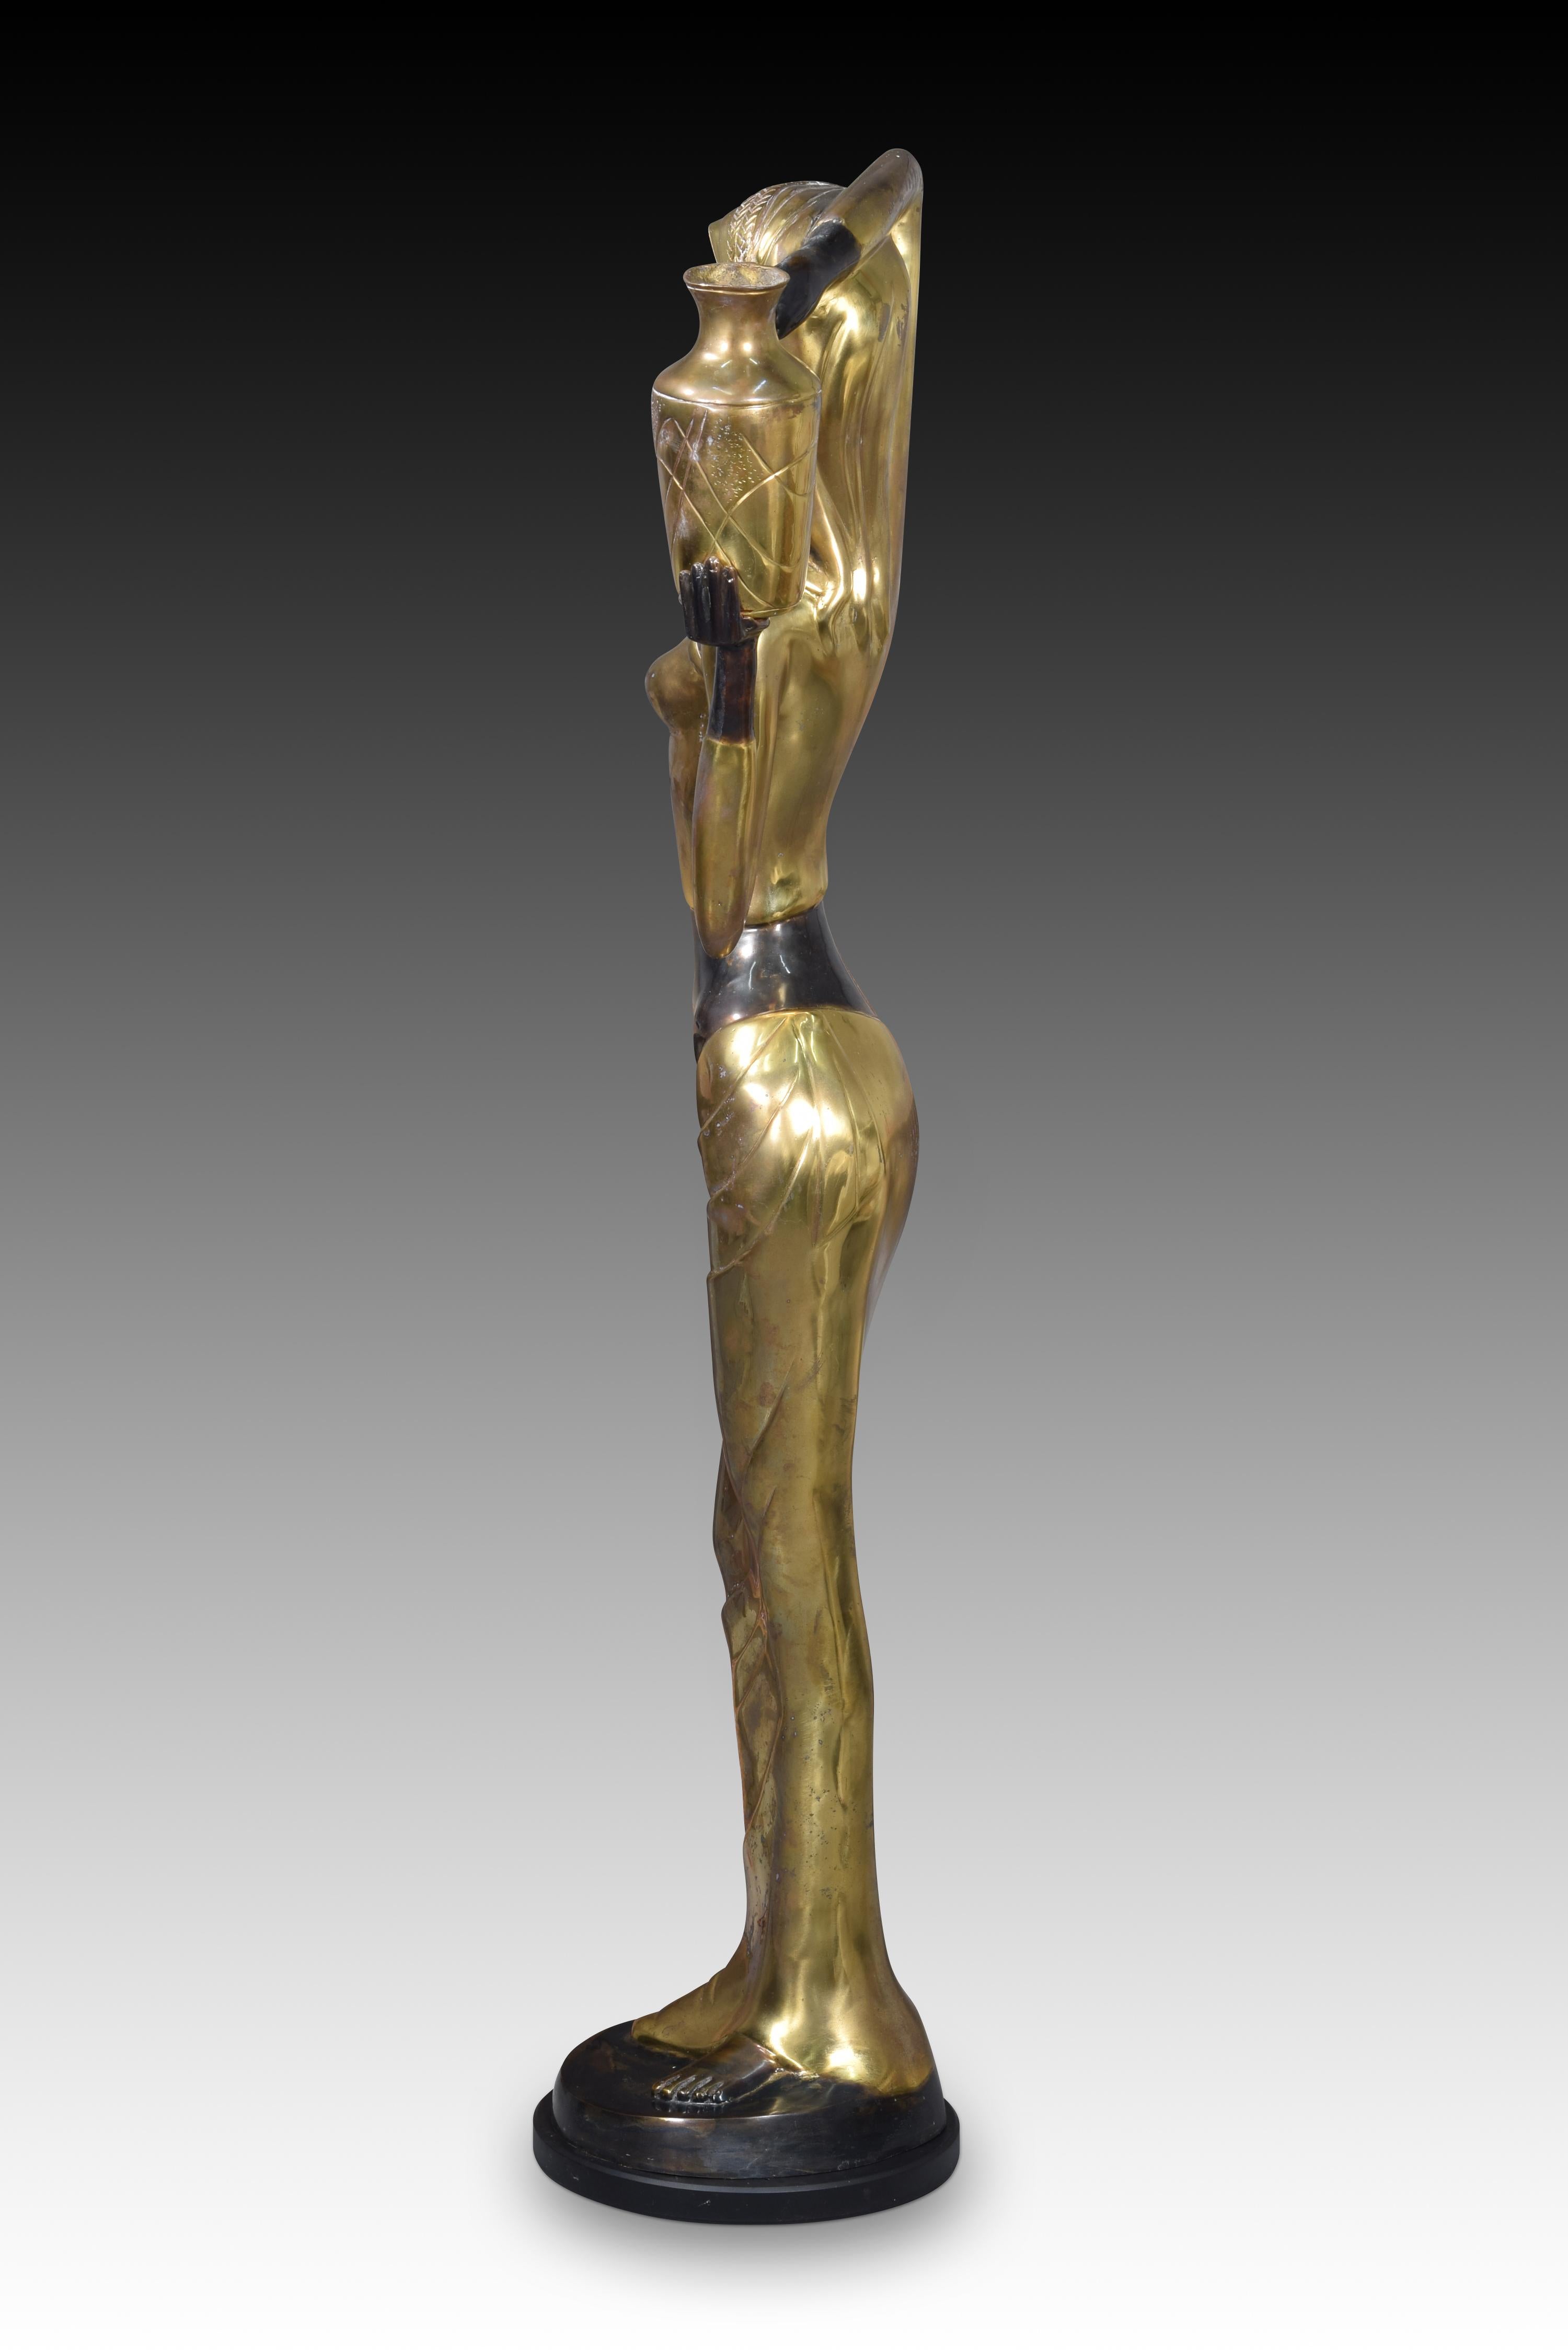 Unknown African water bearer. Bronze. 20th century